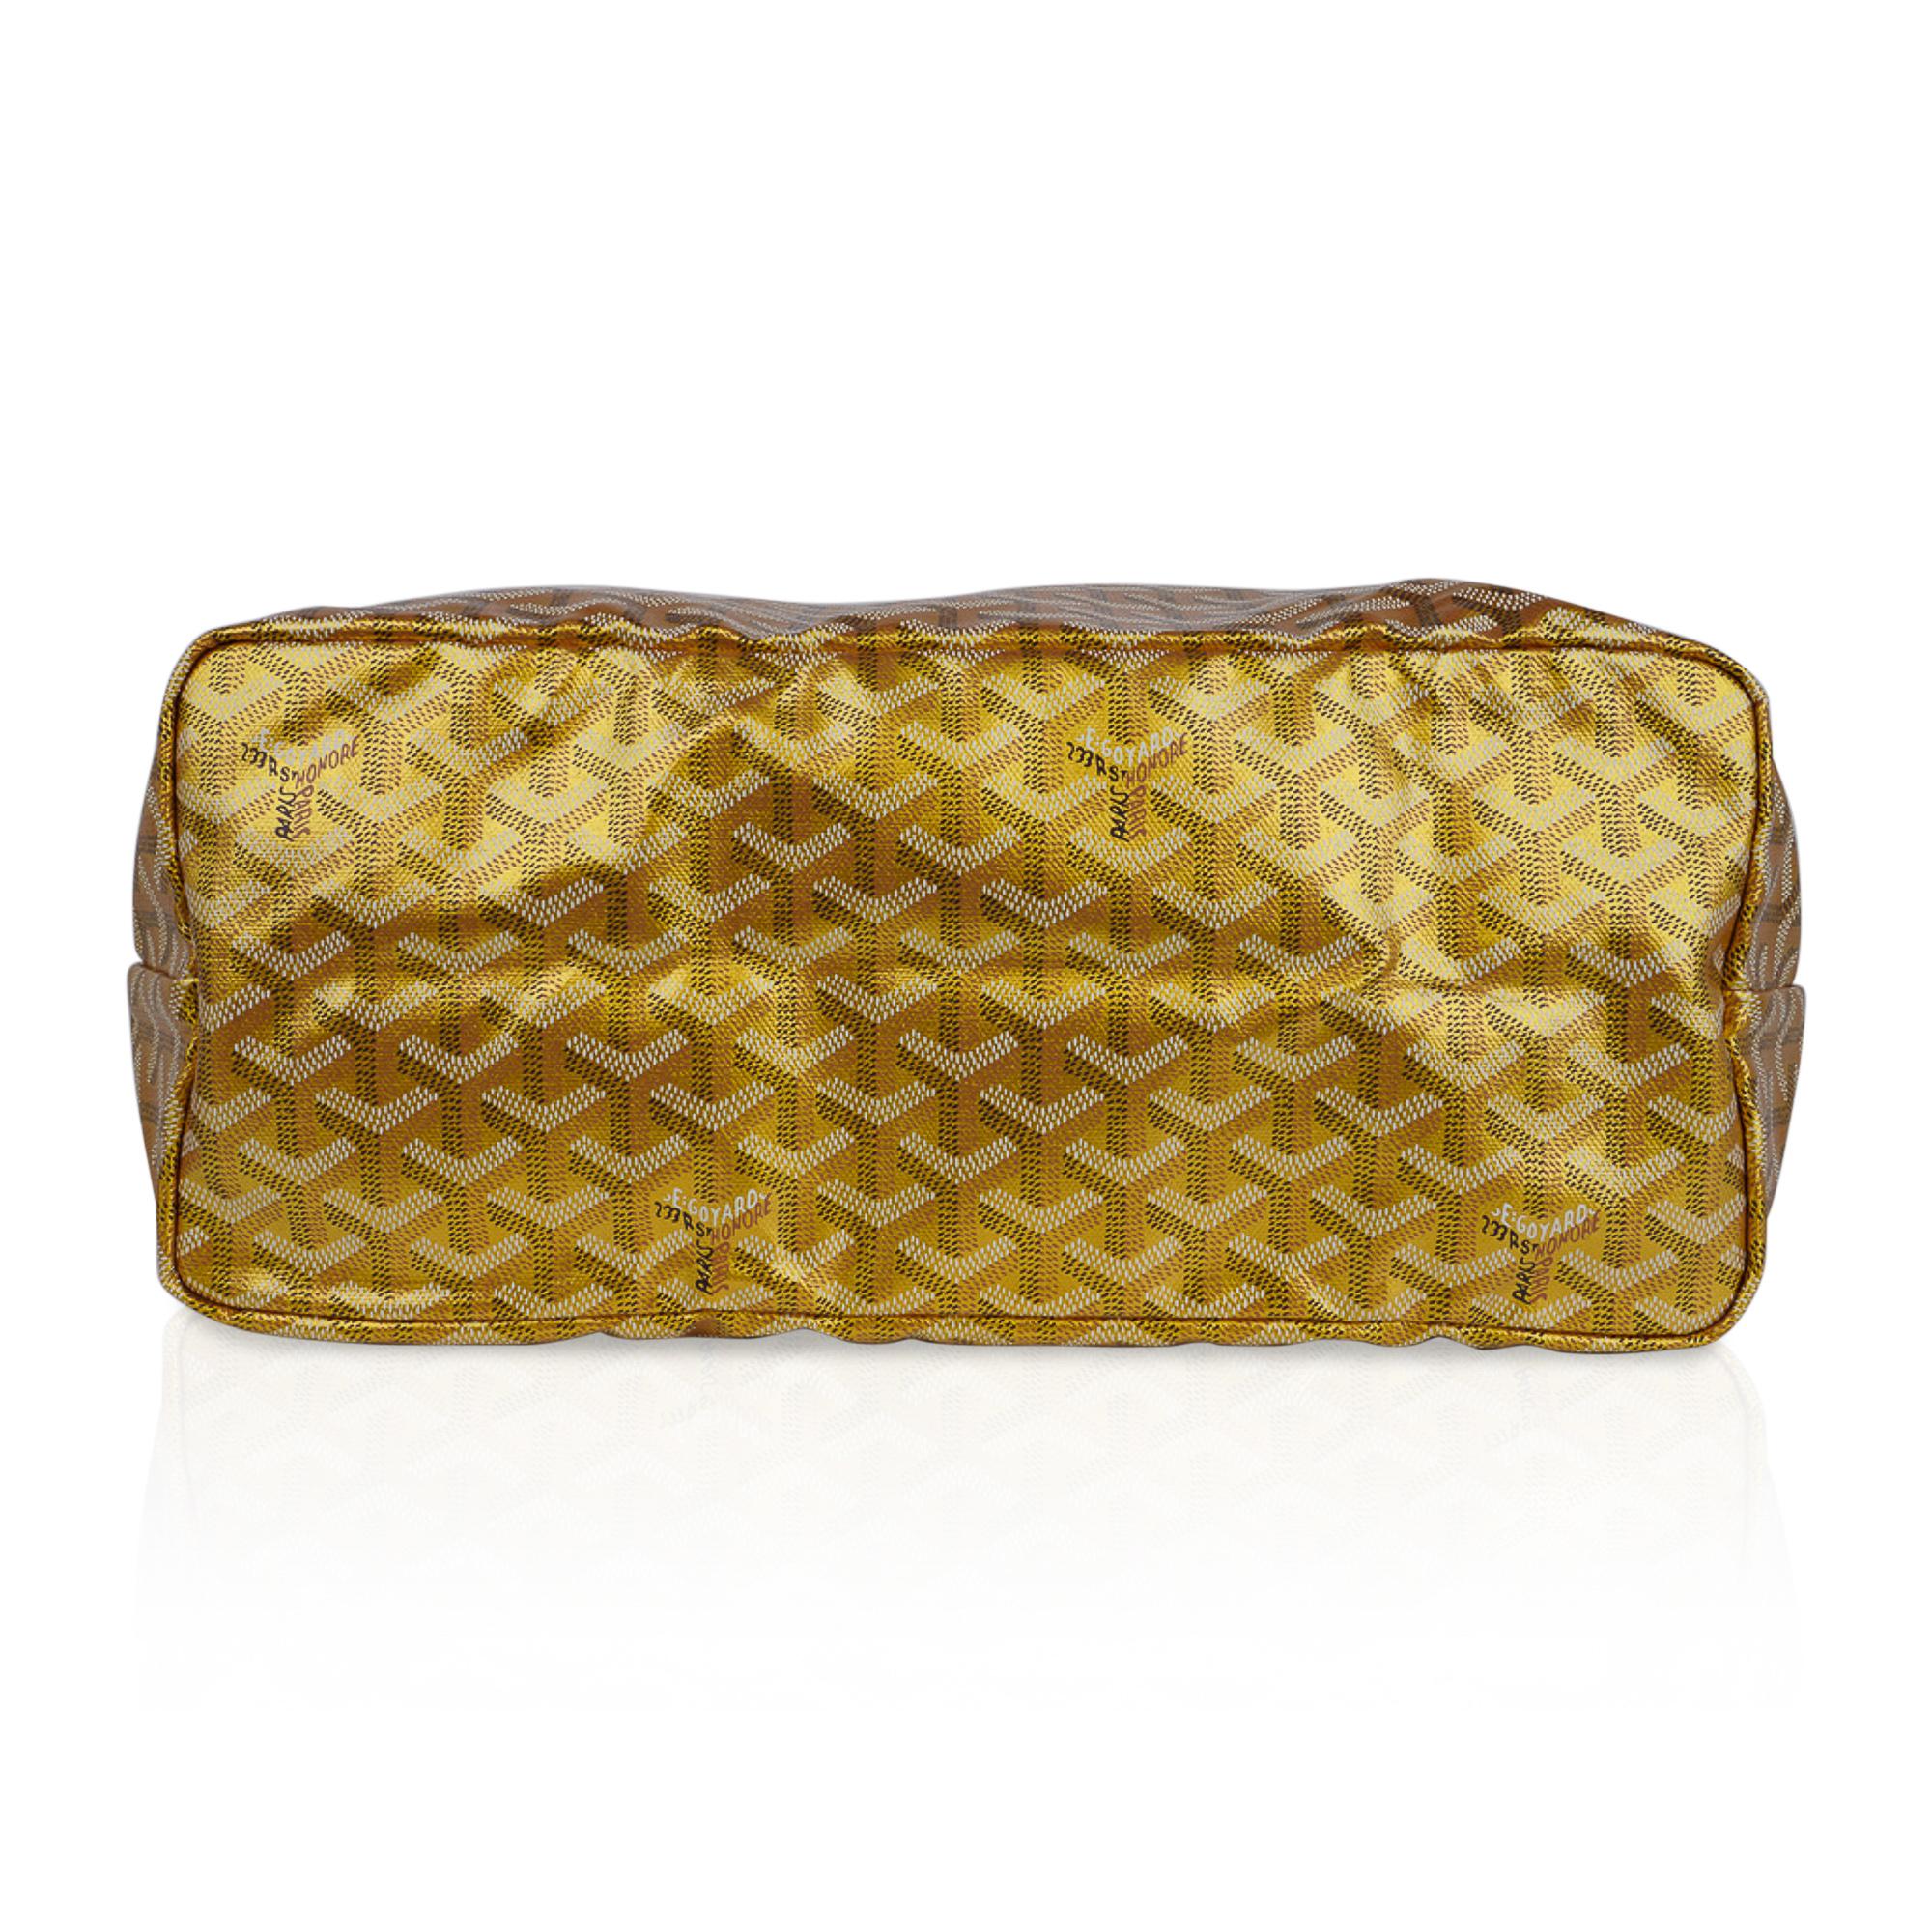 Goyard Saint Louis Metallic Gold PM Tote Bag Limited Edition 2021 New w/Tag 7